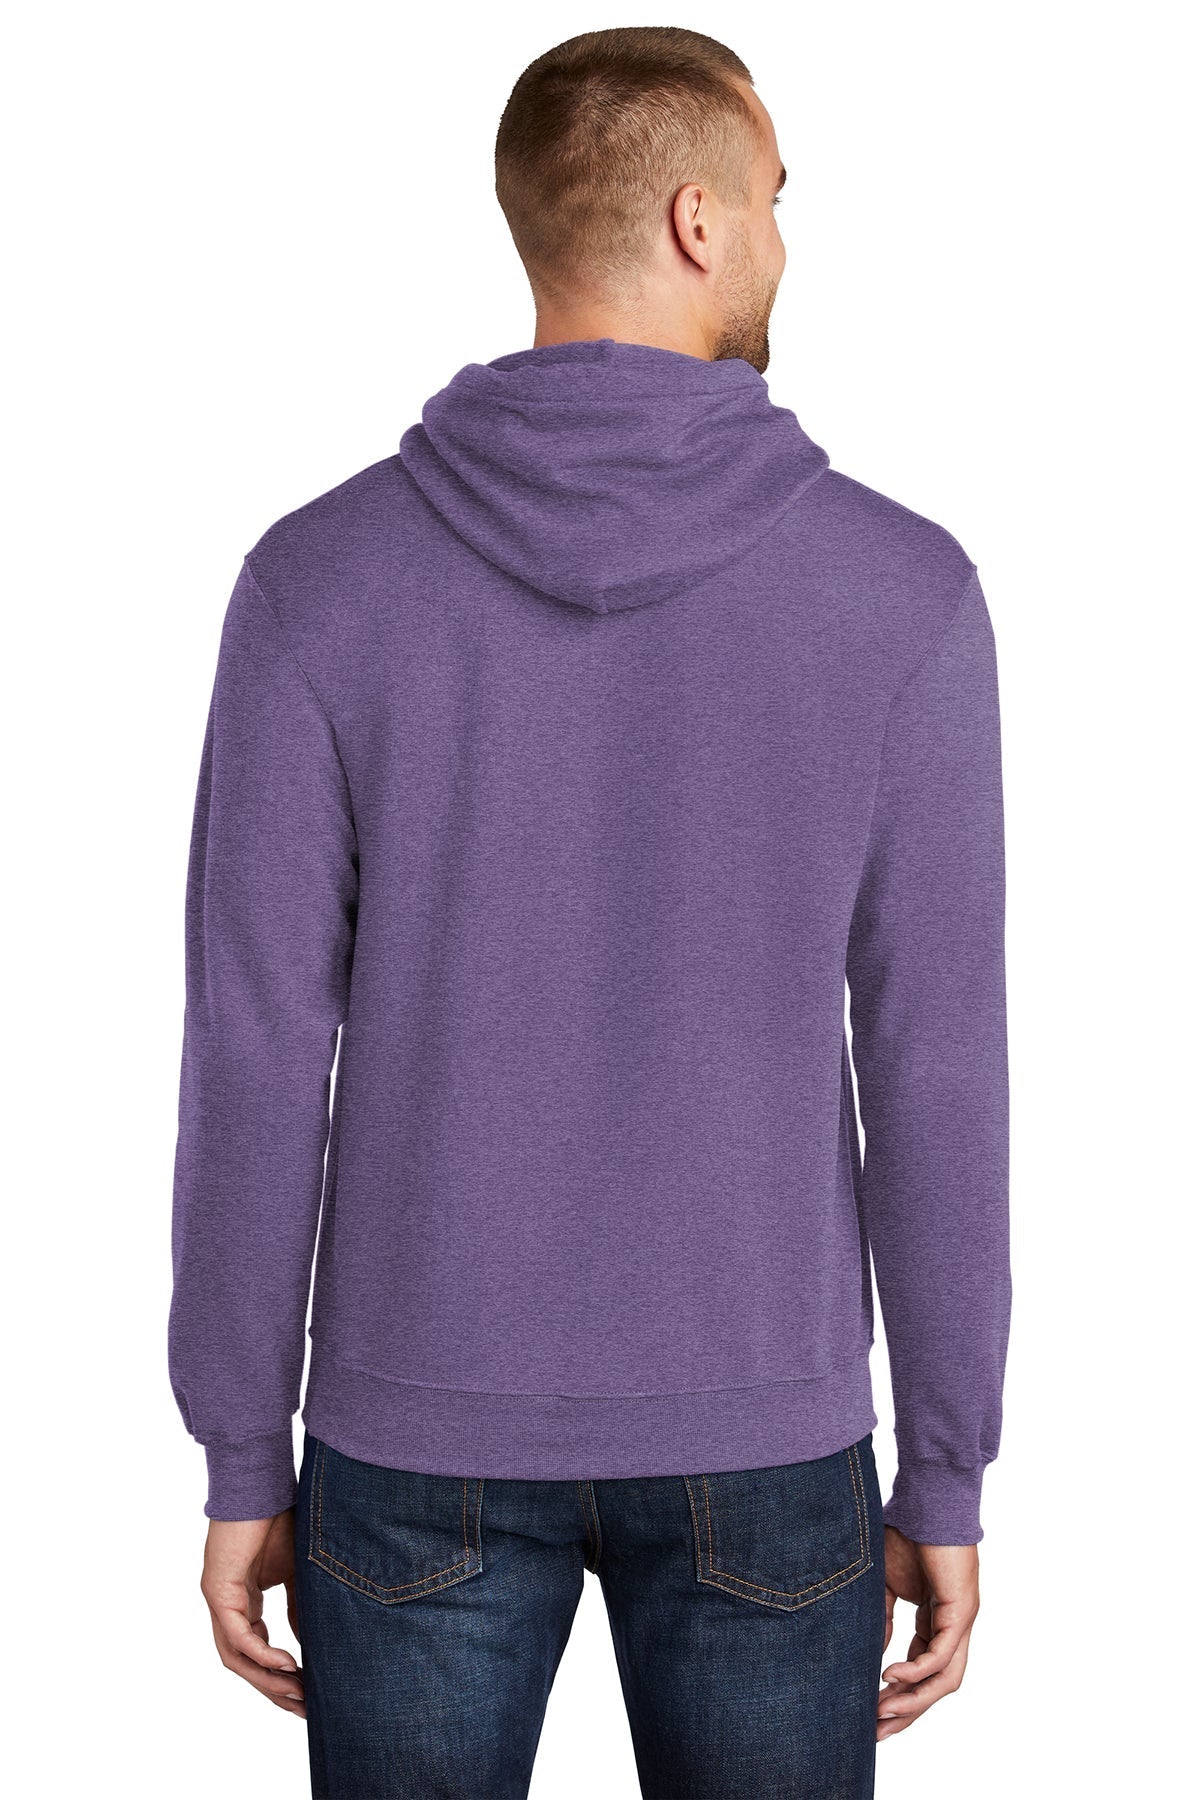 Fleece Pullover Hooded Sweatshirt  / Purple / Larkspur Middle School Wrestling